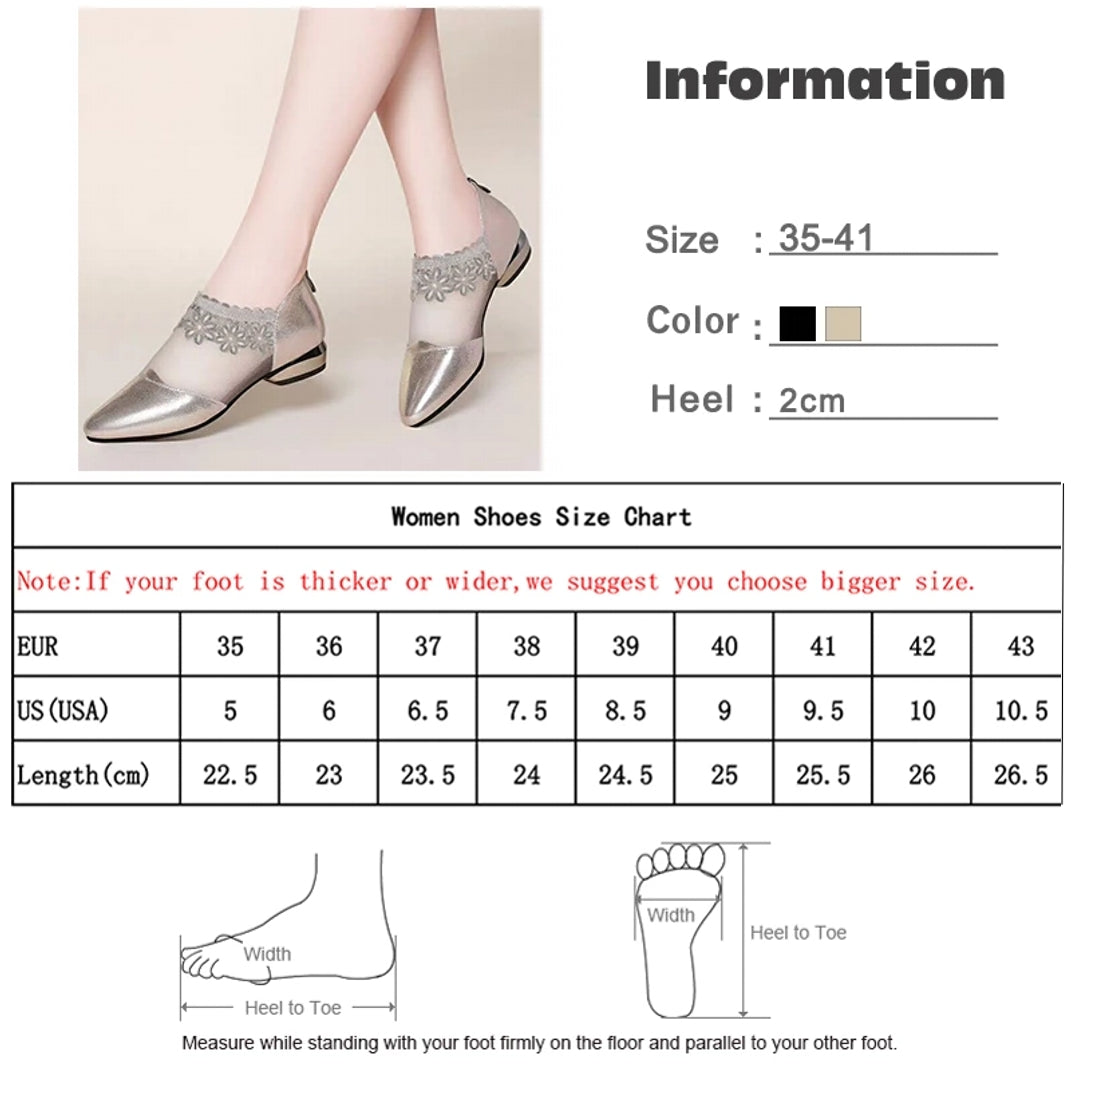 Buy Bata Comfit Women Sandal Size UK10, Color Grey (5612288) at Amazon.in